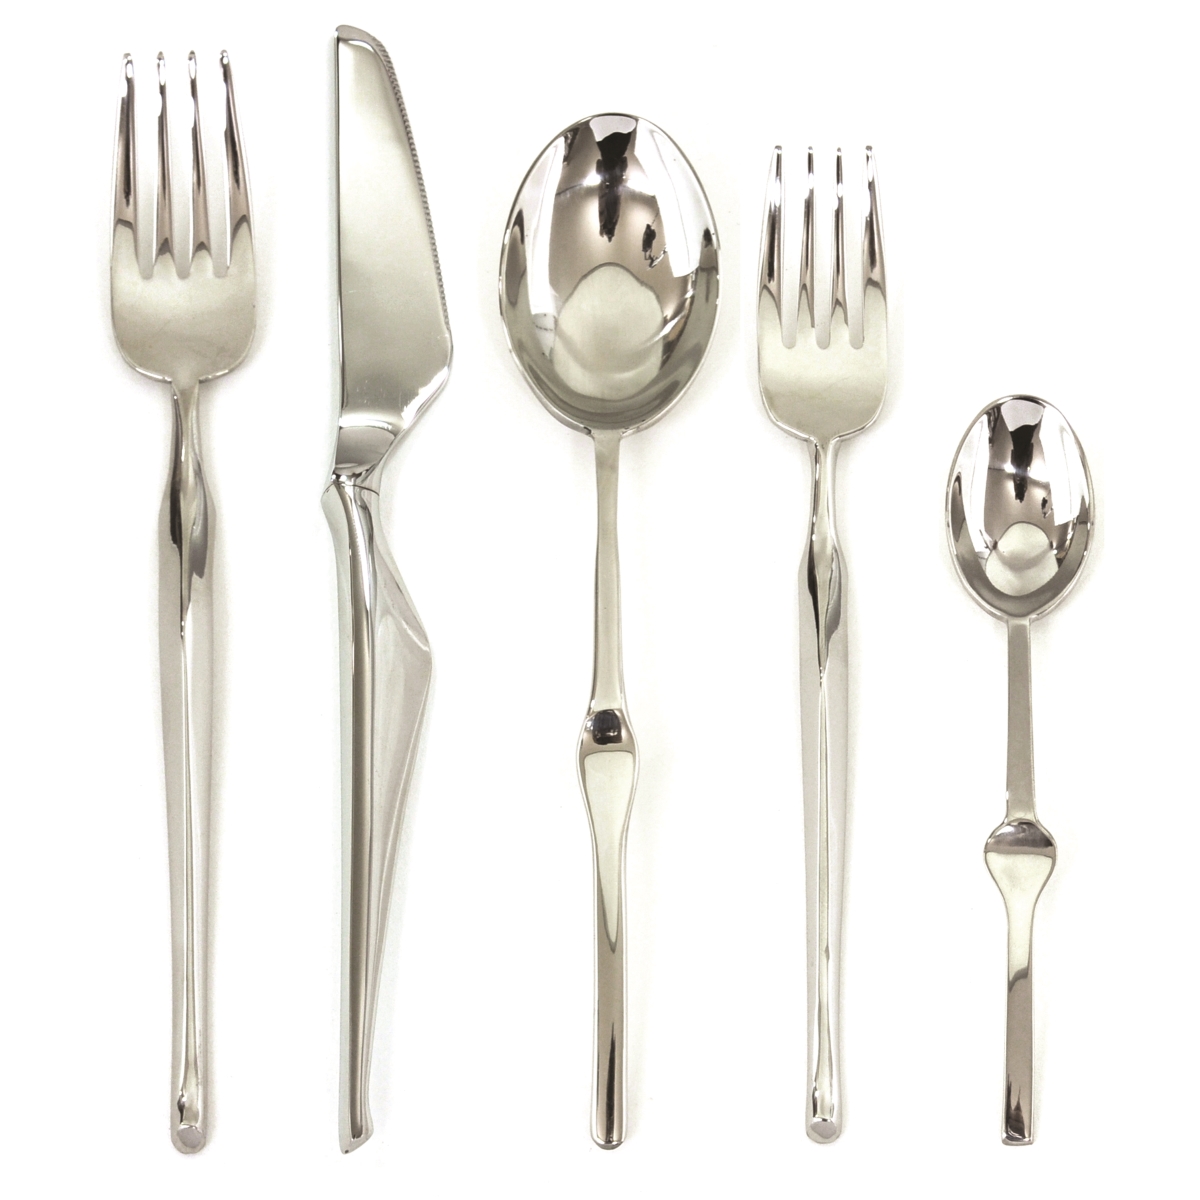 Picture of Mepra 132228005 Ergonomica Cutlery Set - 5 Piece